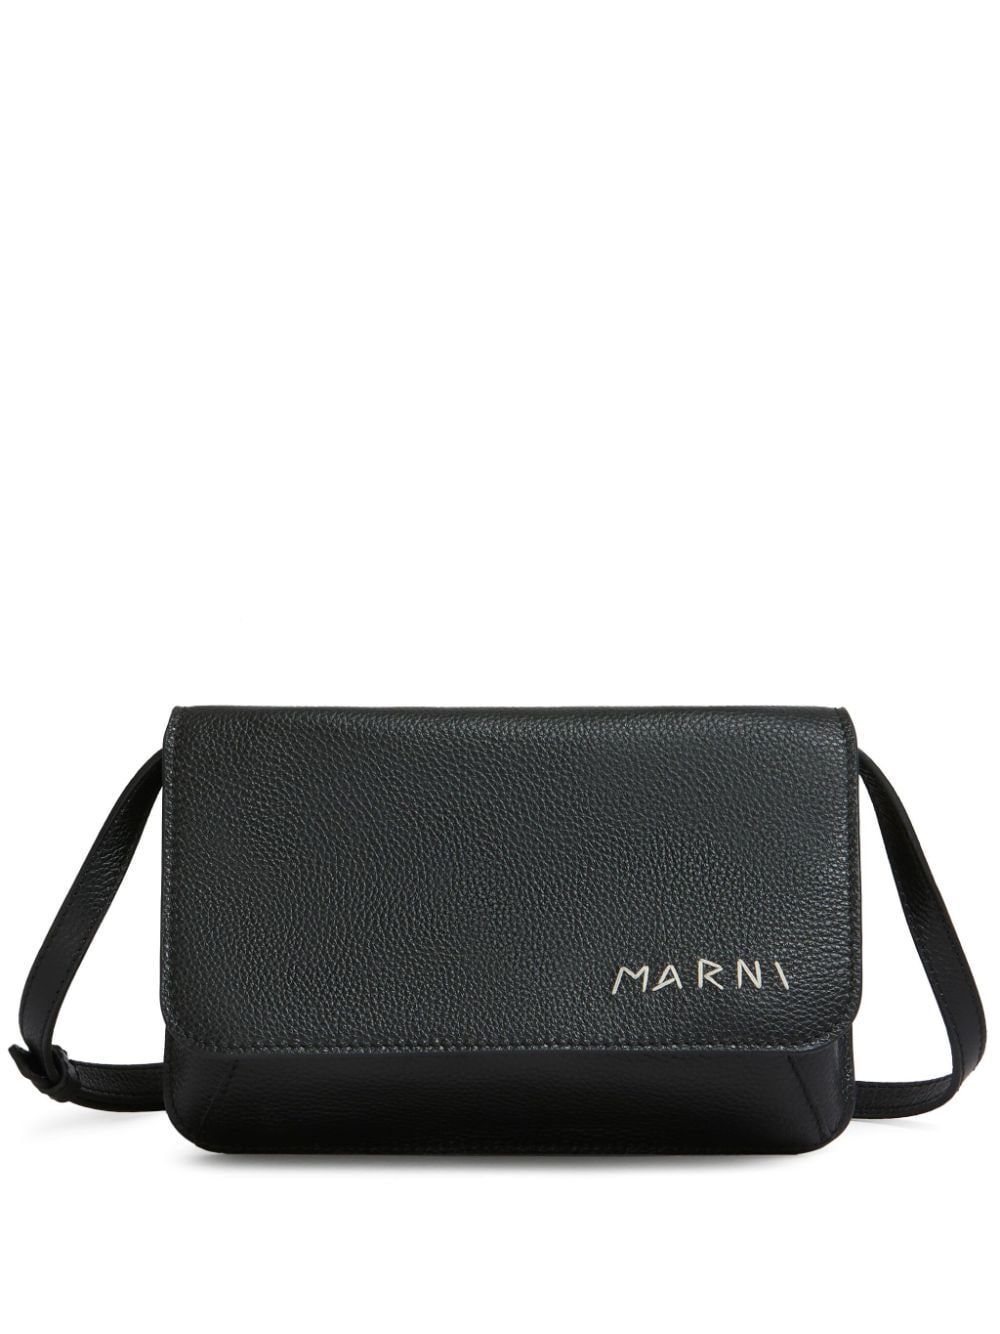 Marni Mending leather pochette bag - Black von Marni